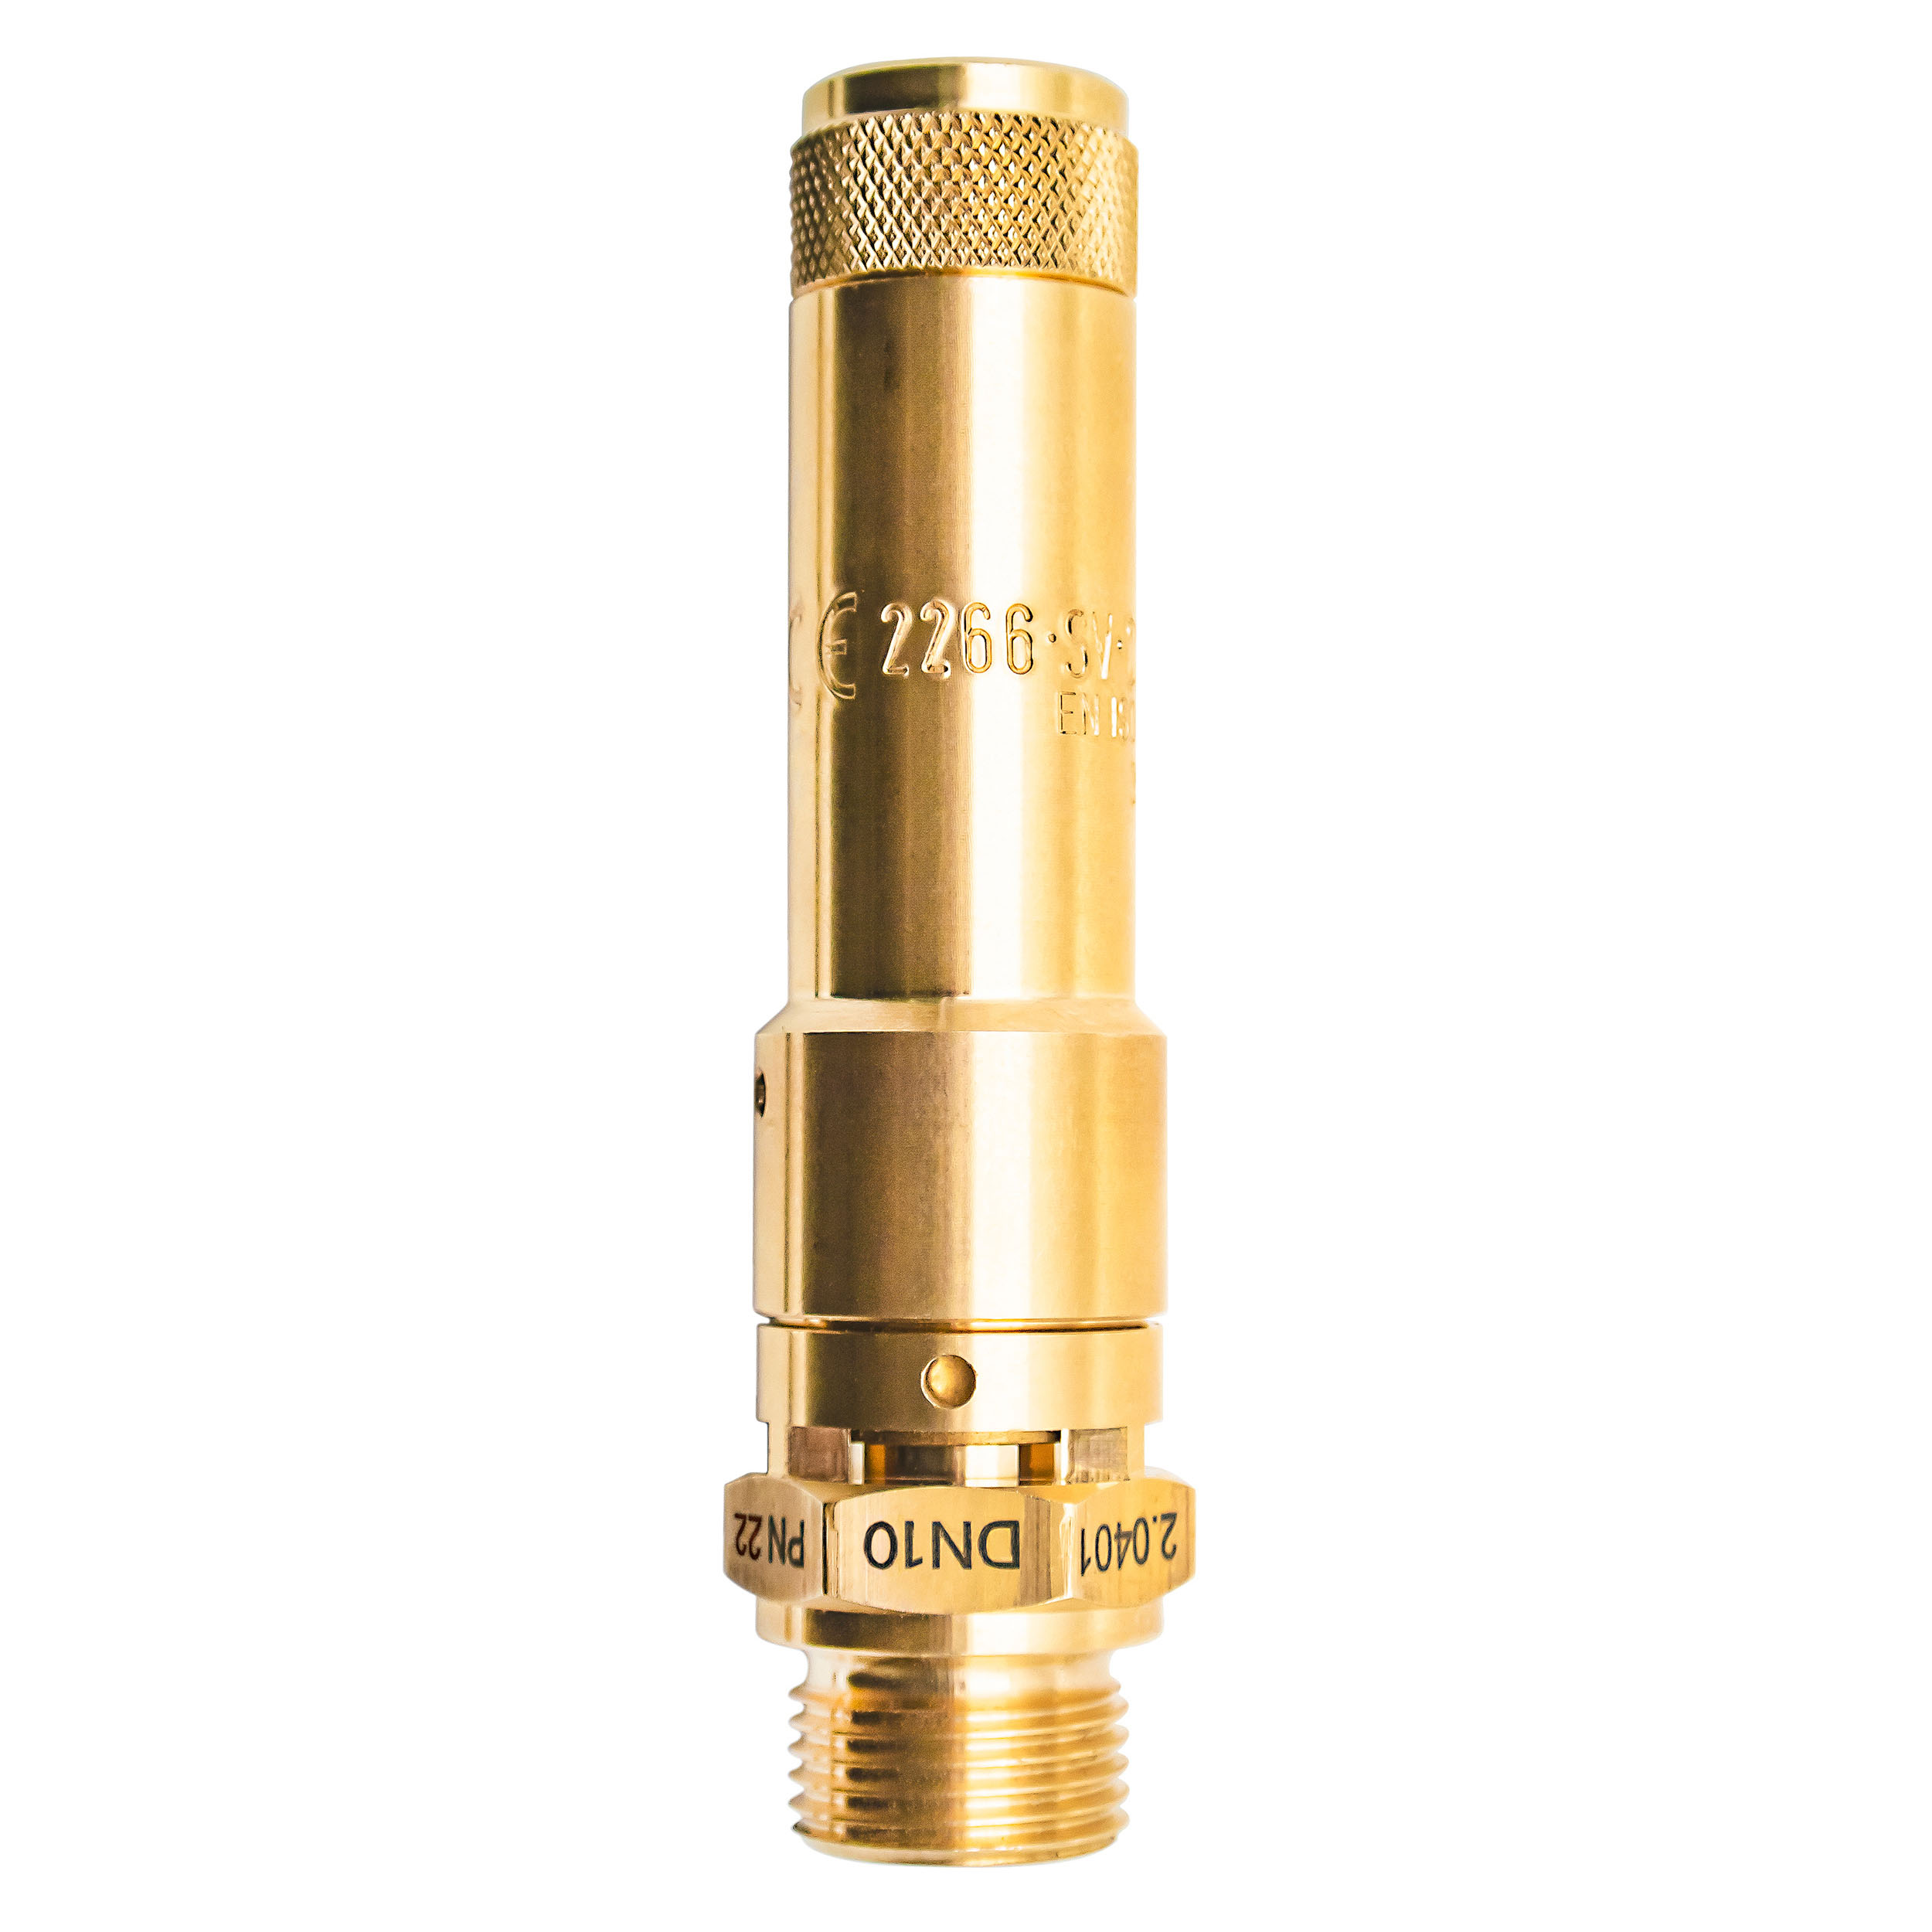 Savety valve component tested DN 10, G¾, set pressure: 9.2 bar (133,4 psi)